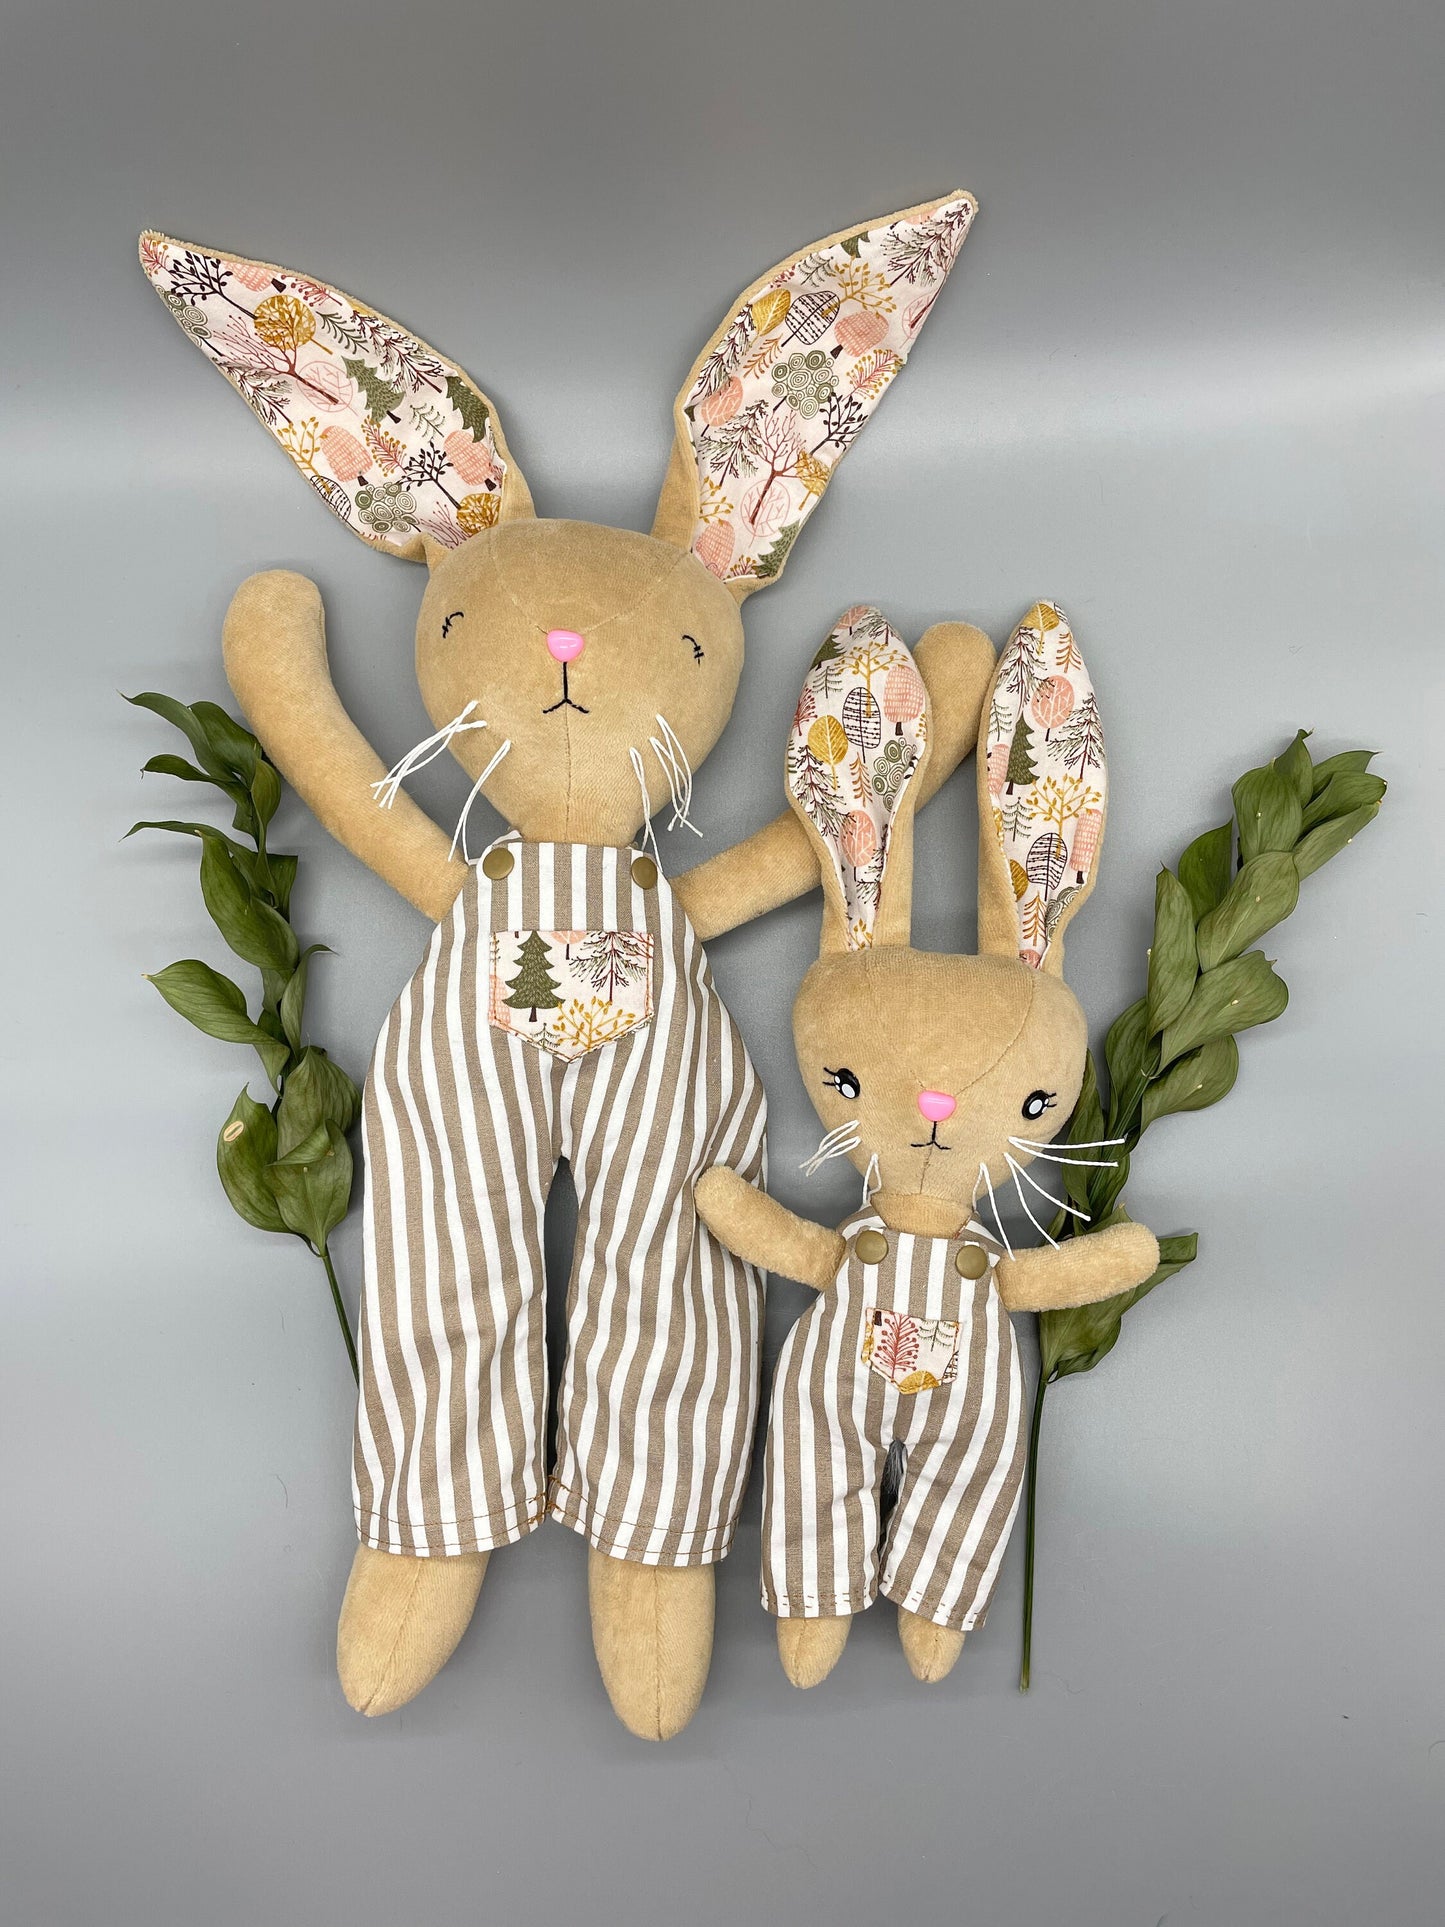 Reversible Handmade Easter Bunny, "GALAHAD", Stuffed animal, boy easter basket, plush, easter gift, gift for kids, Easter Doll, brown bunny